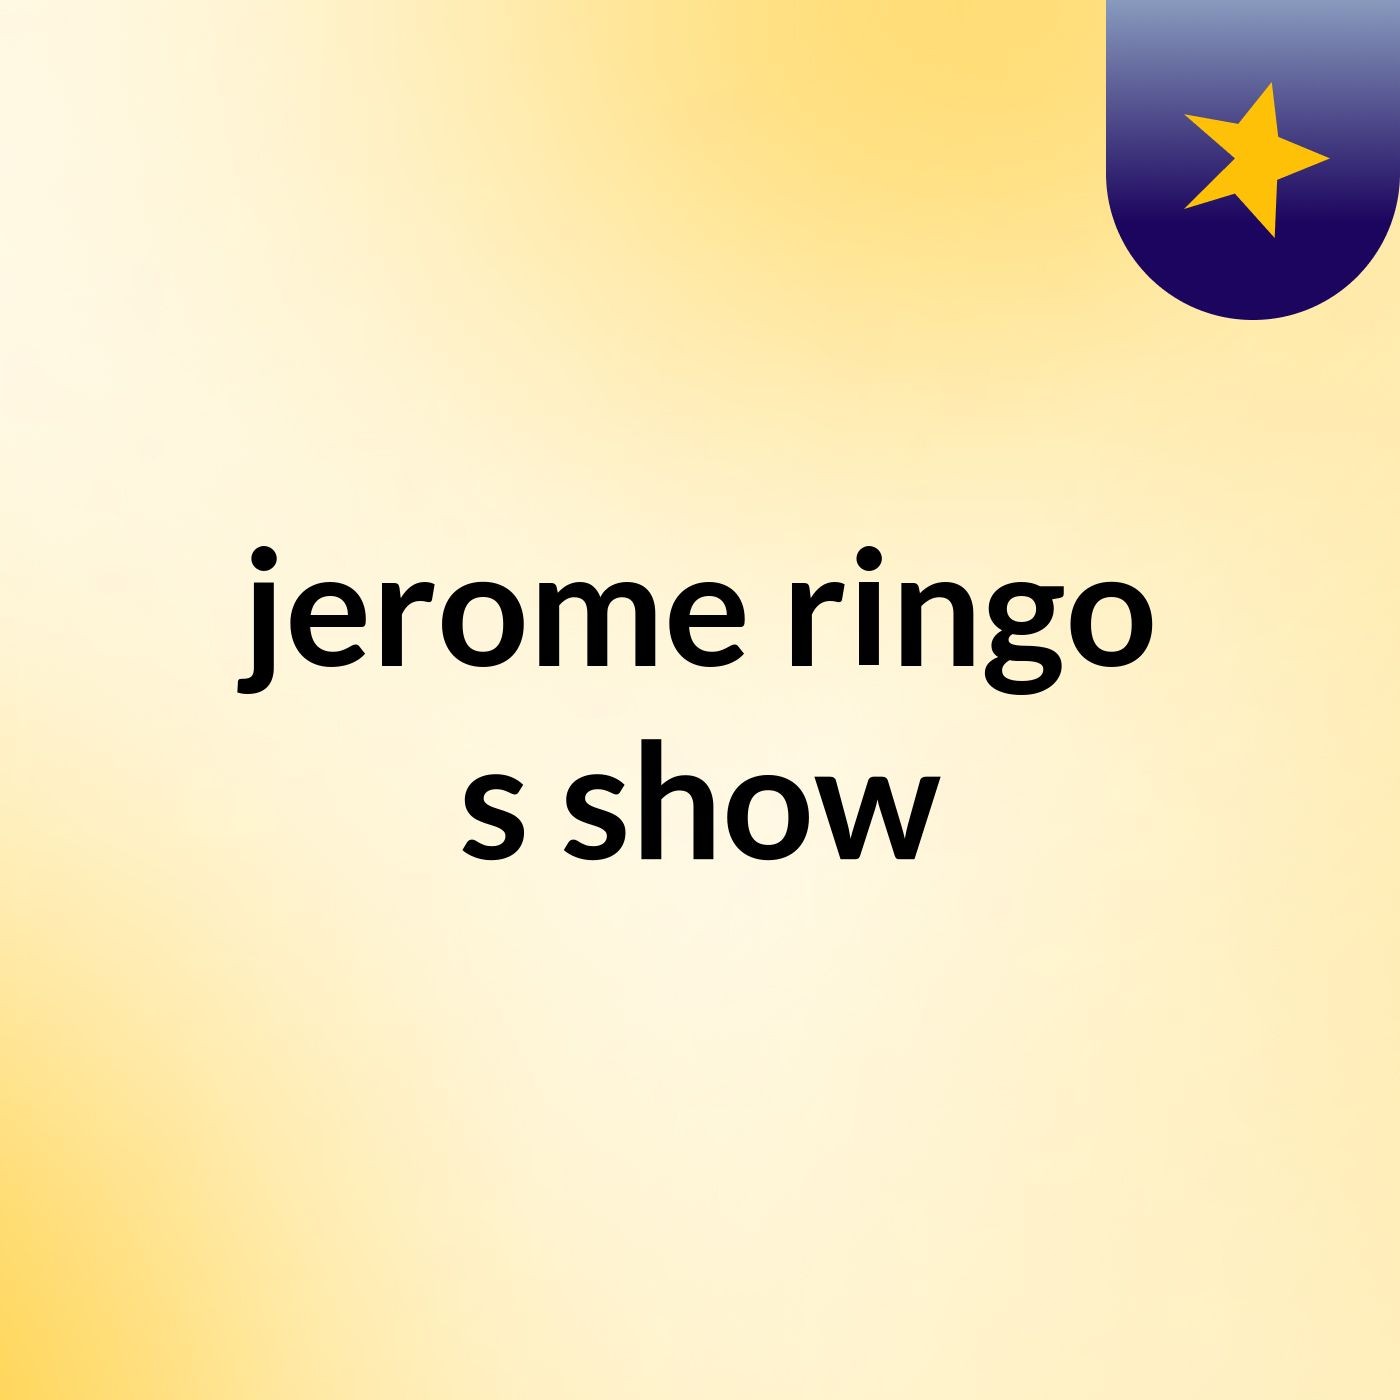 jerome ringo's show